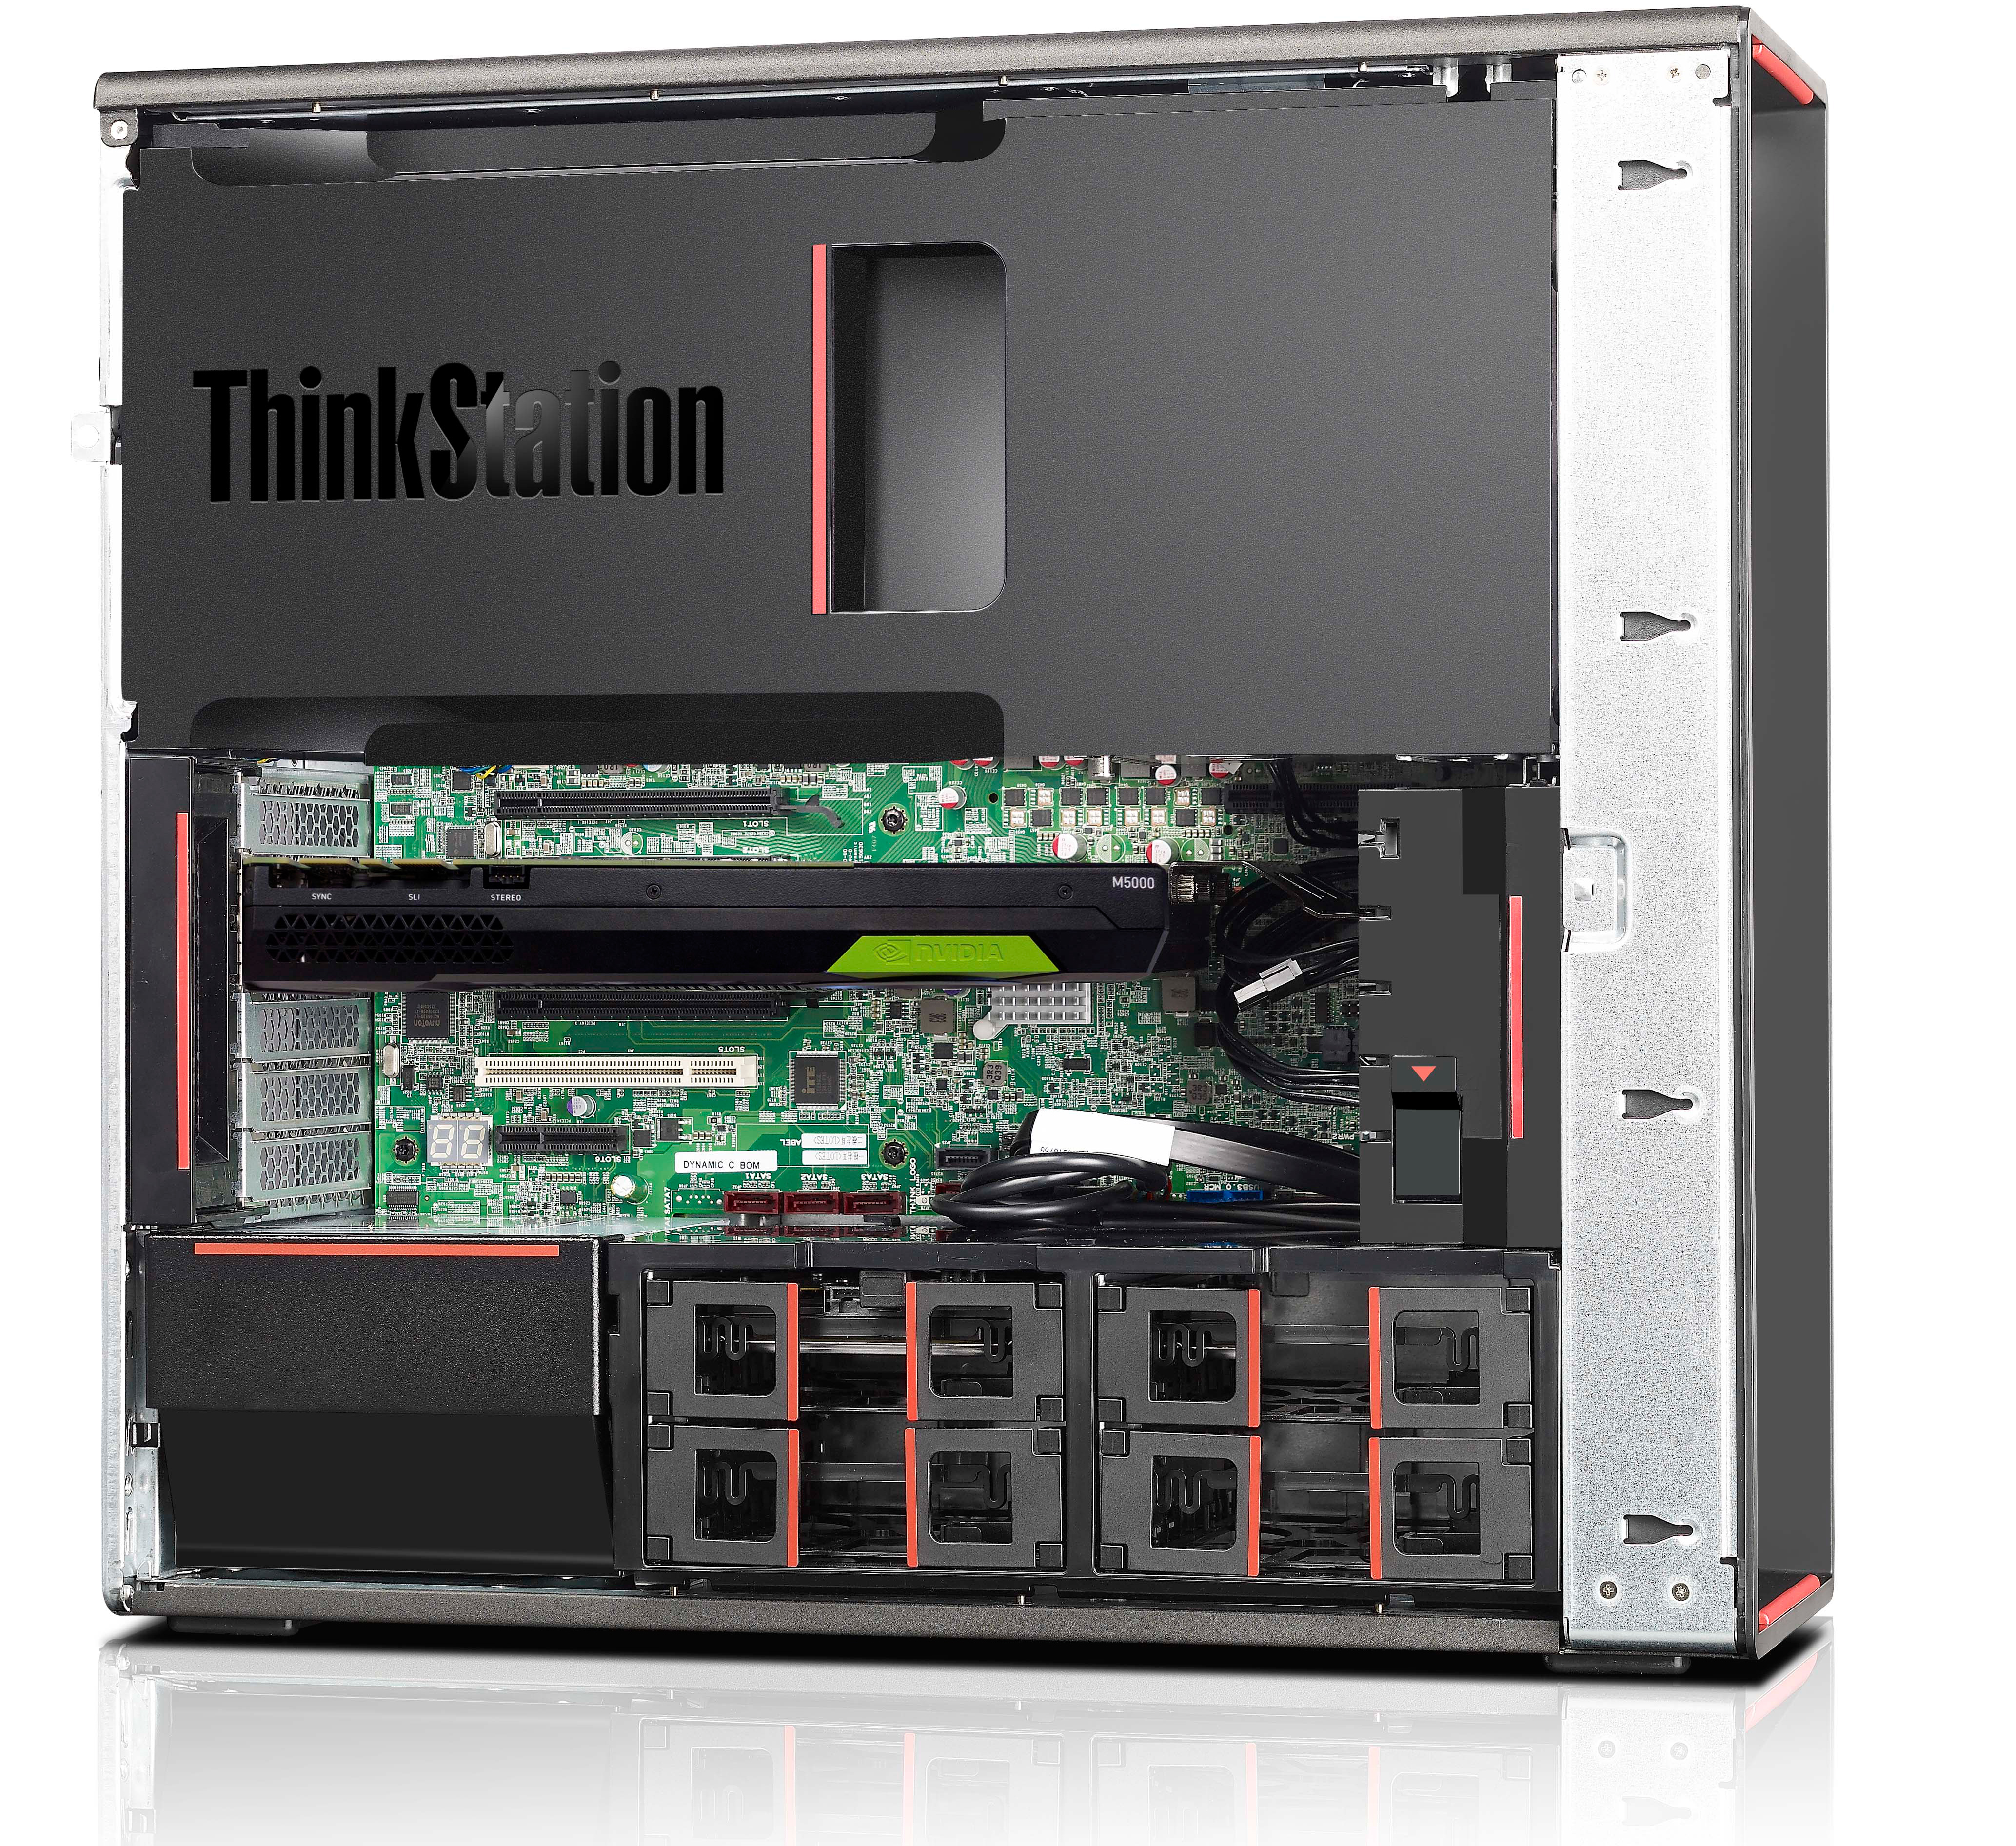 Lenovo Upgrades 2-Way ThinkStation Workstations with Intel Xeon E5 